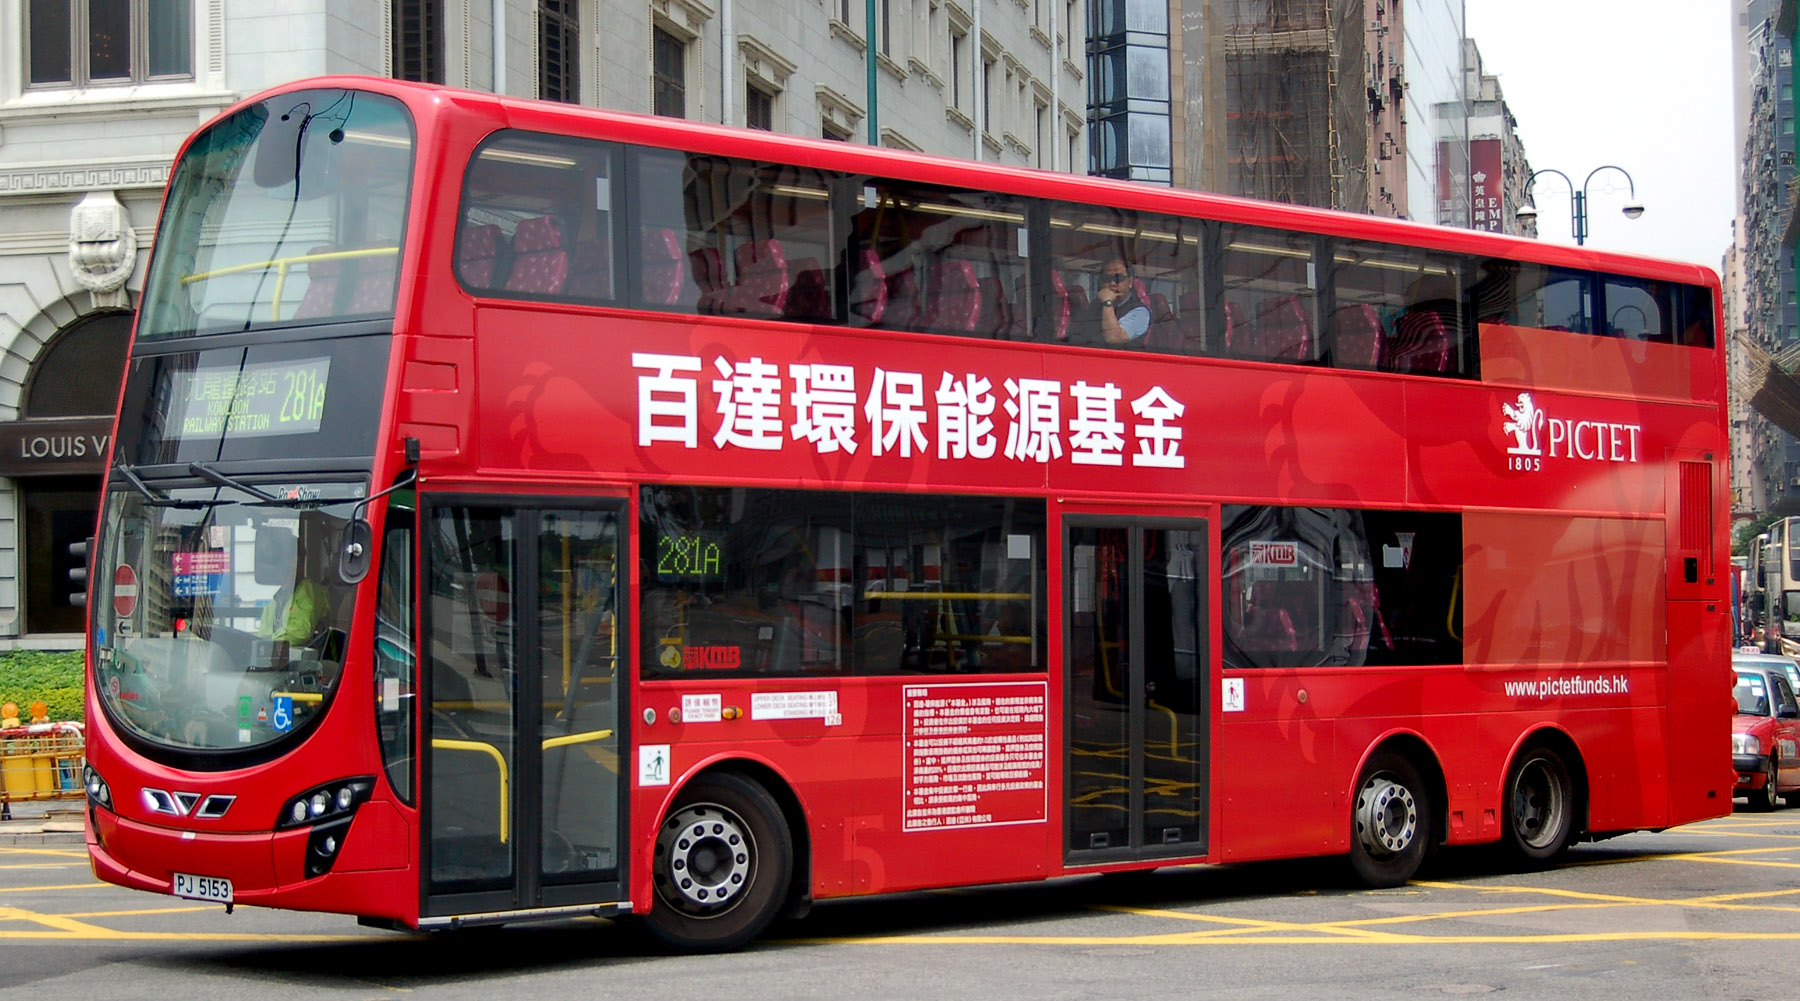 hk bus - ChuduInfo